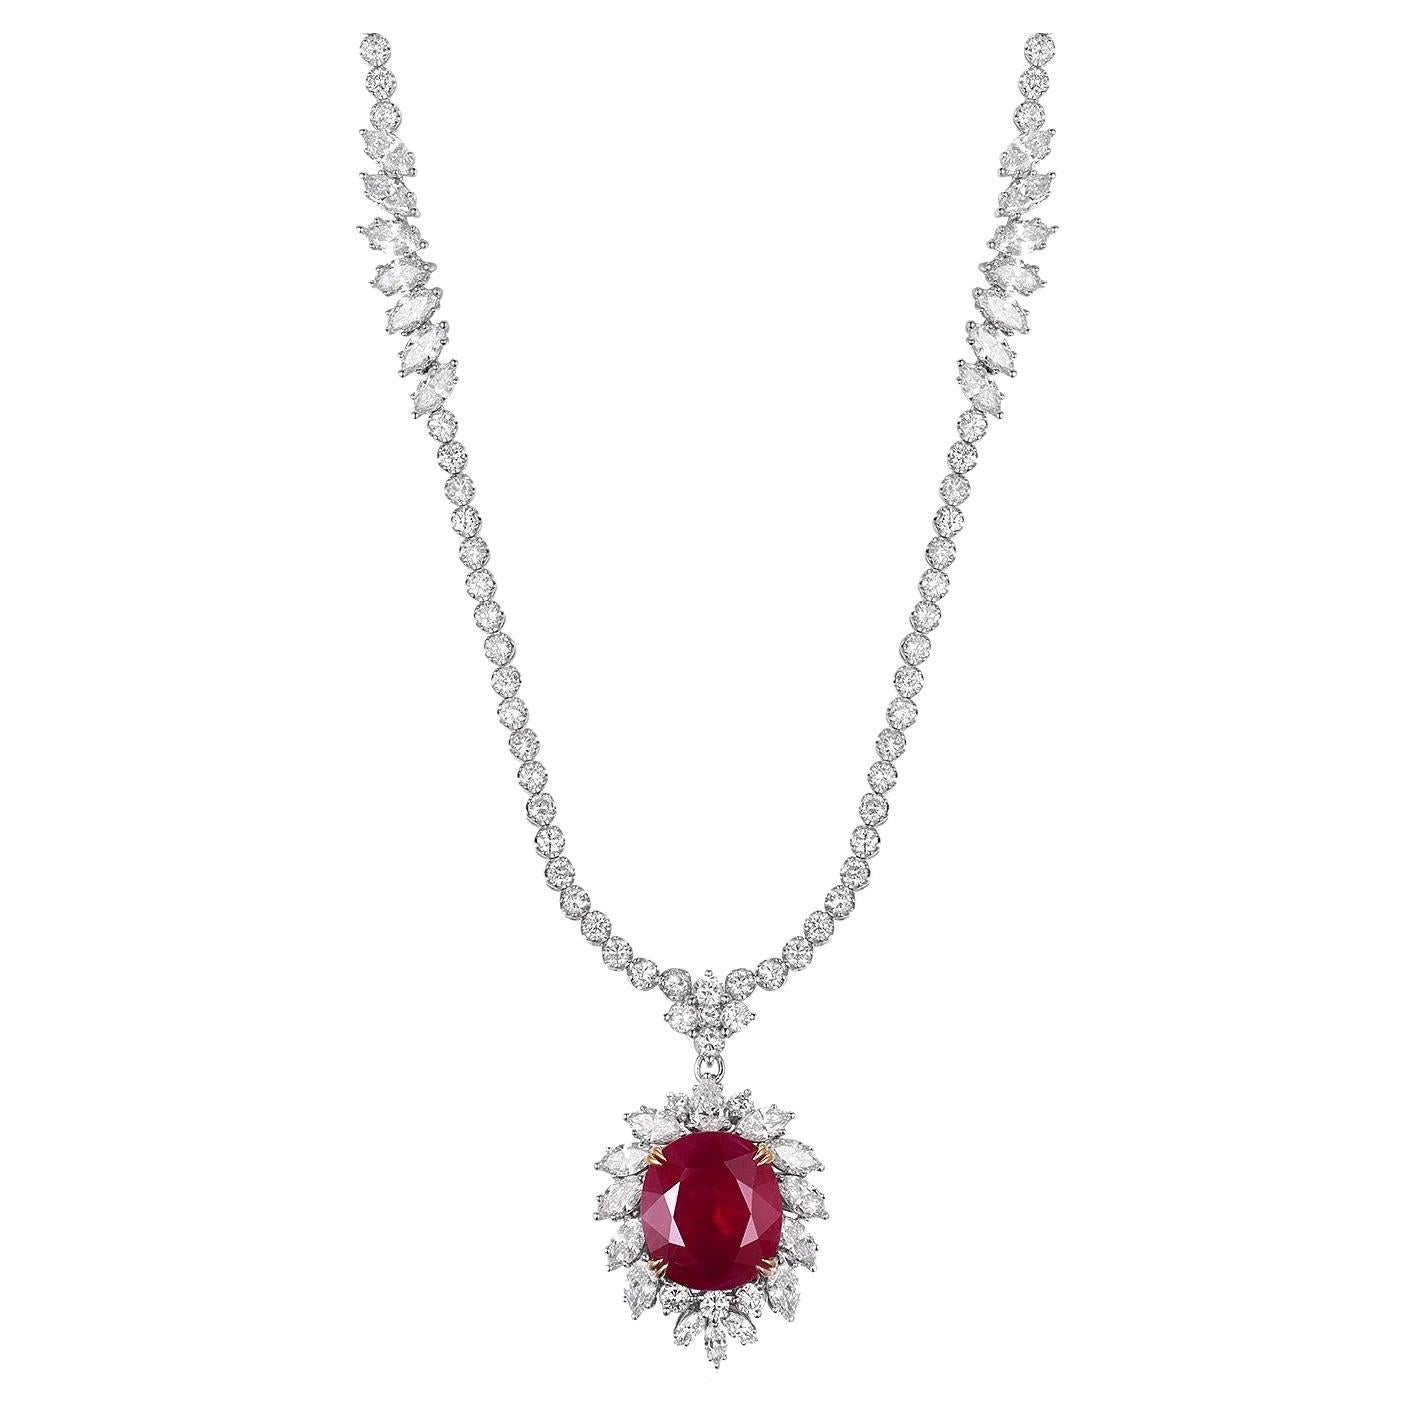 8.61 Carat Burma Ruby Diamond Necklace in 18 Karat White Gold For Sale